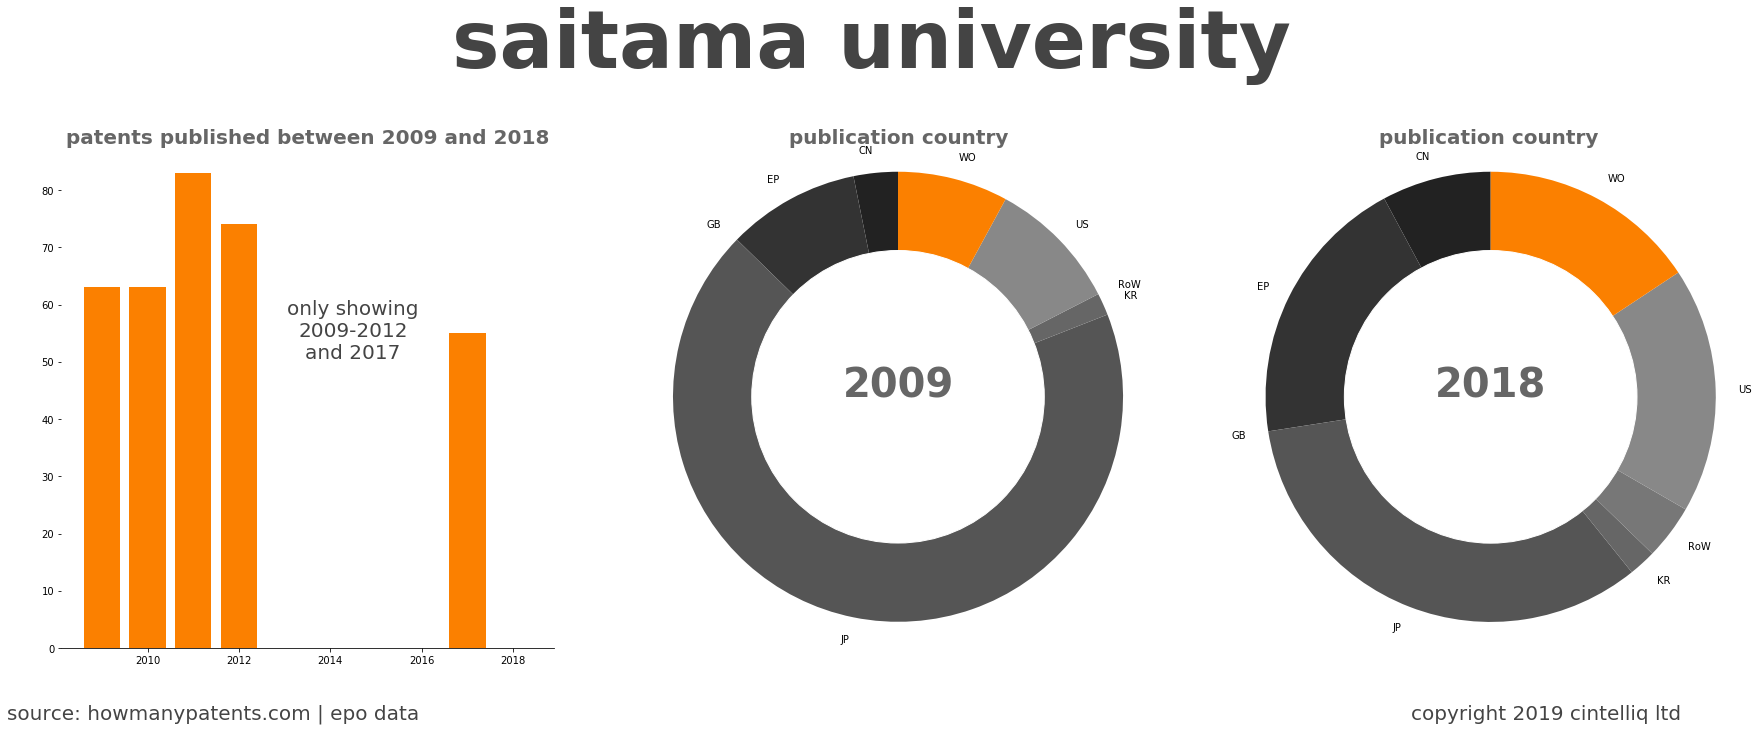 summary of patents for Saitama University